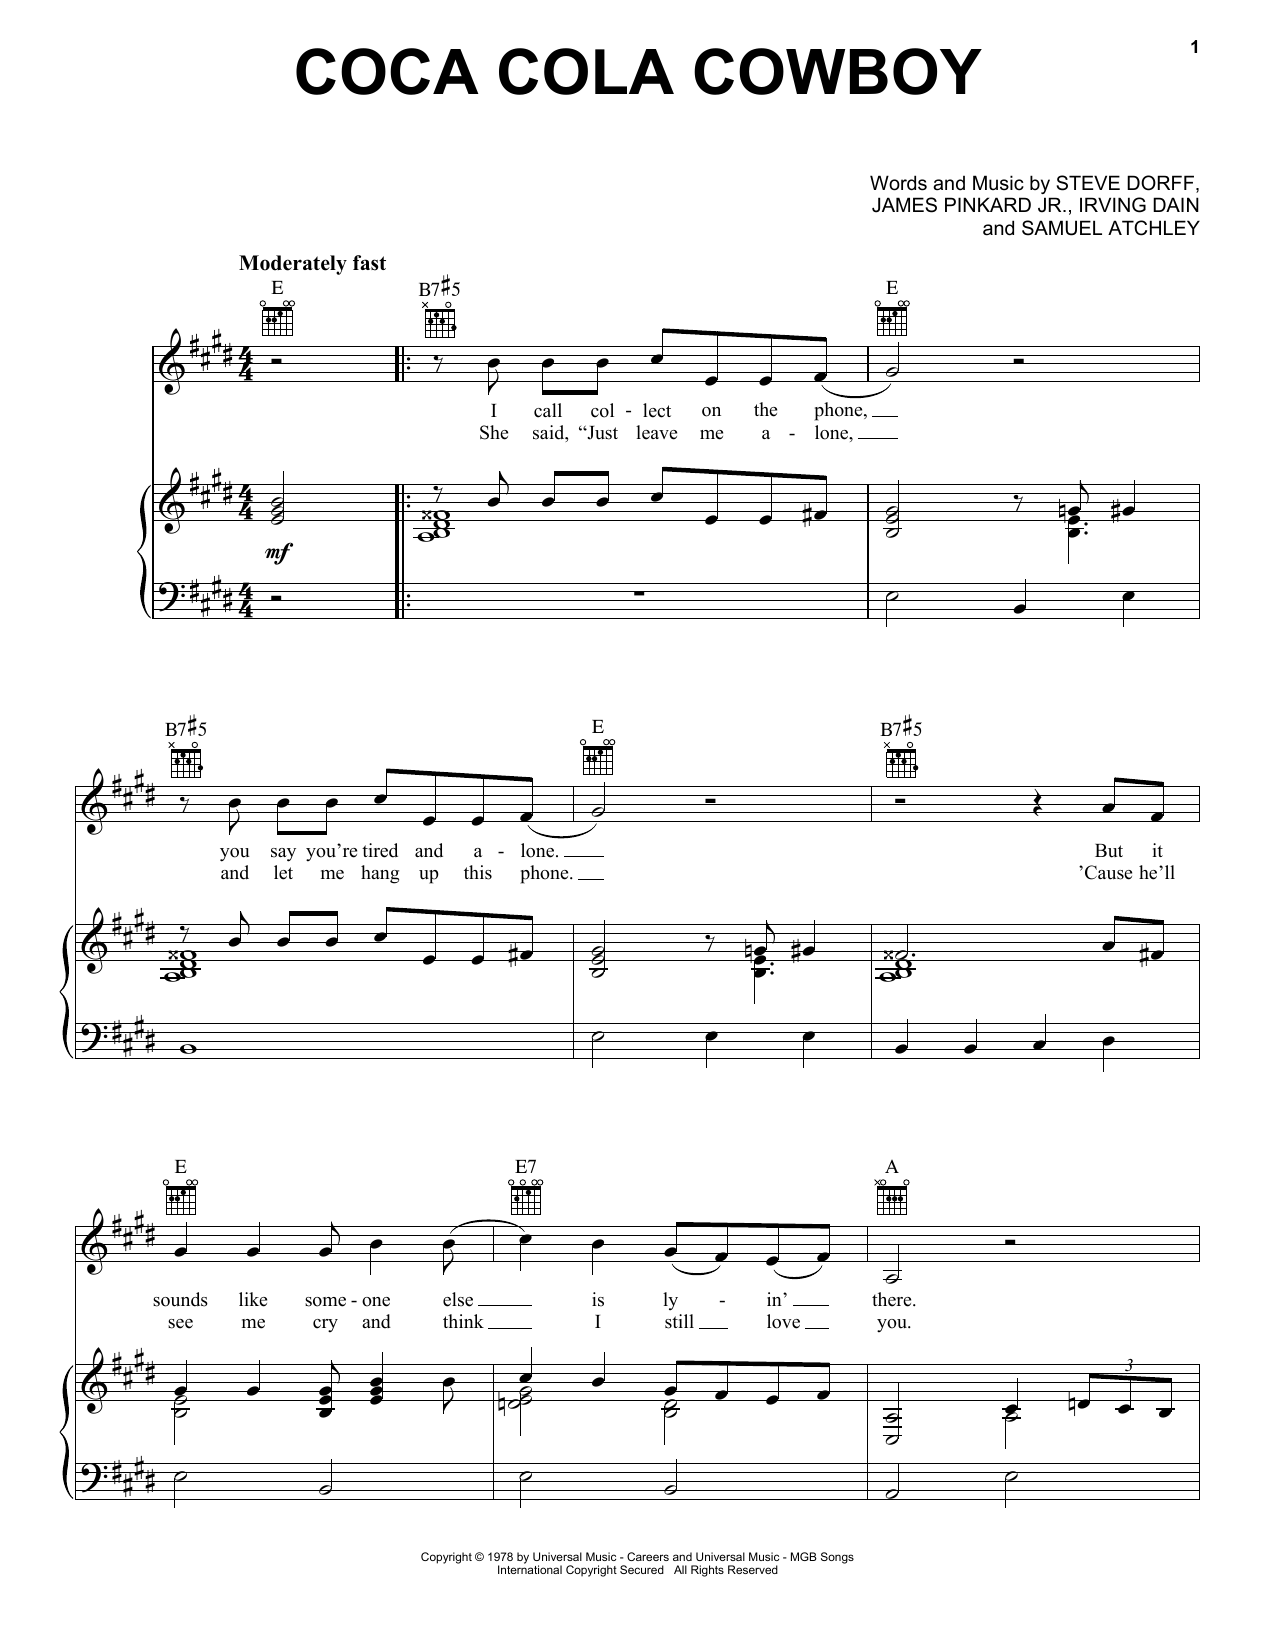 Mel Tillis Coca-Cola Cowboy Sheet Music Notes & Chords for Piano, Vocal & Guitar (Right-Hand Melody) - Download or Print PDF